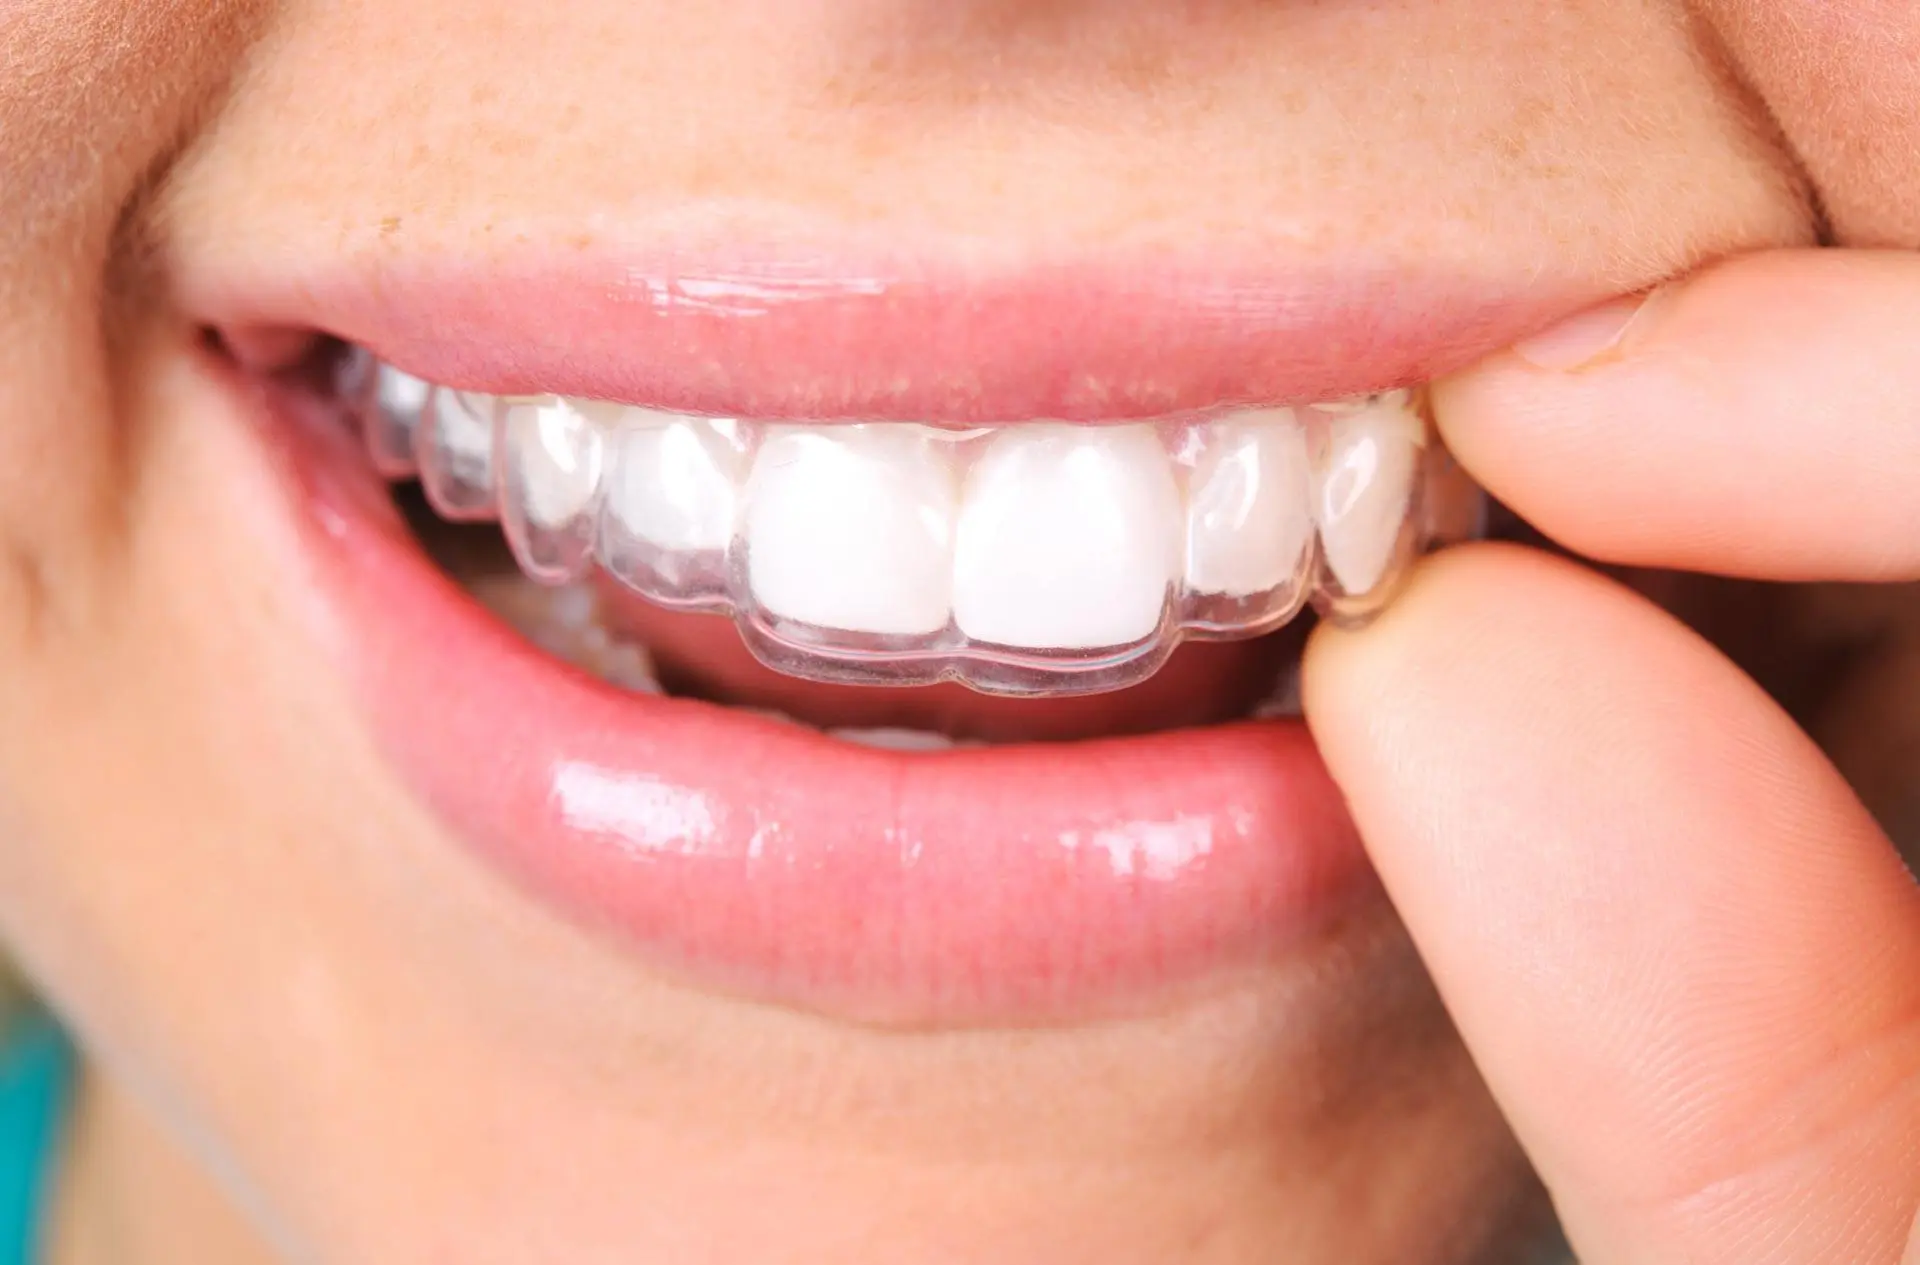 Advantages of Having Straight Teeth